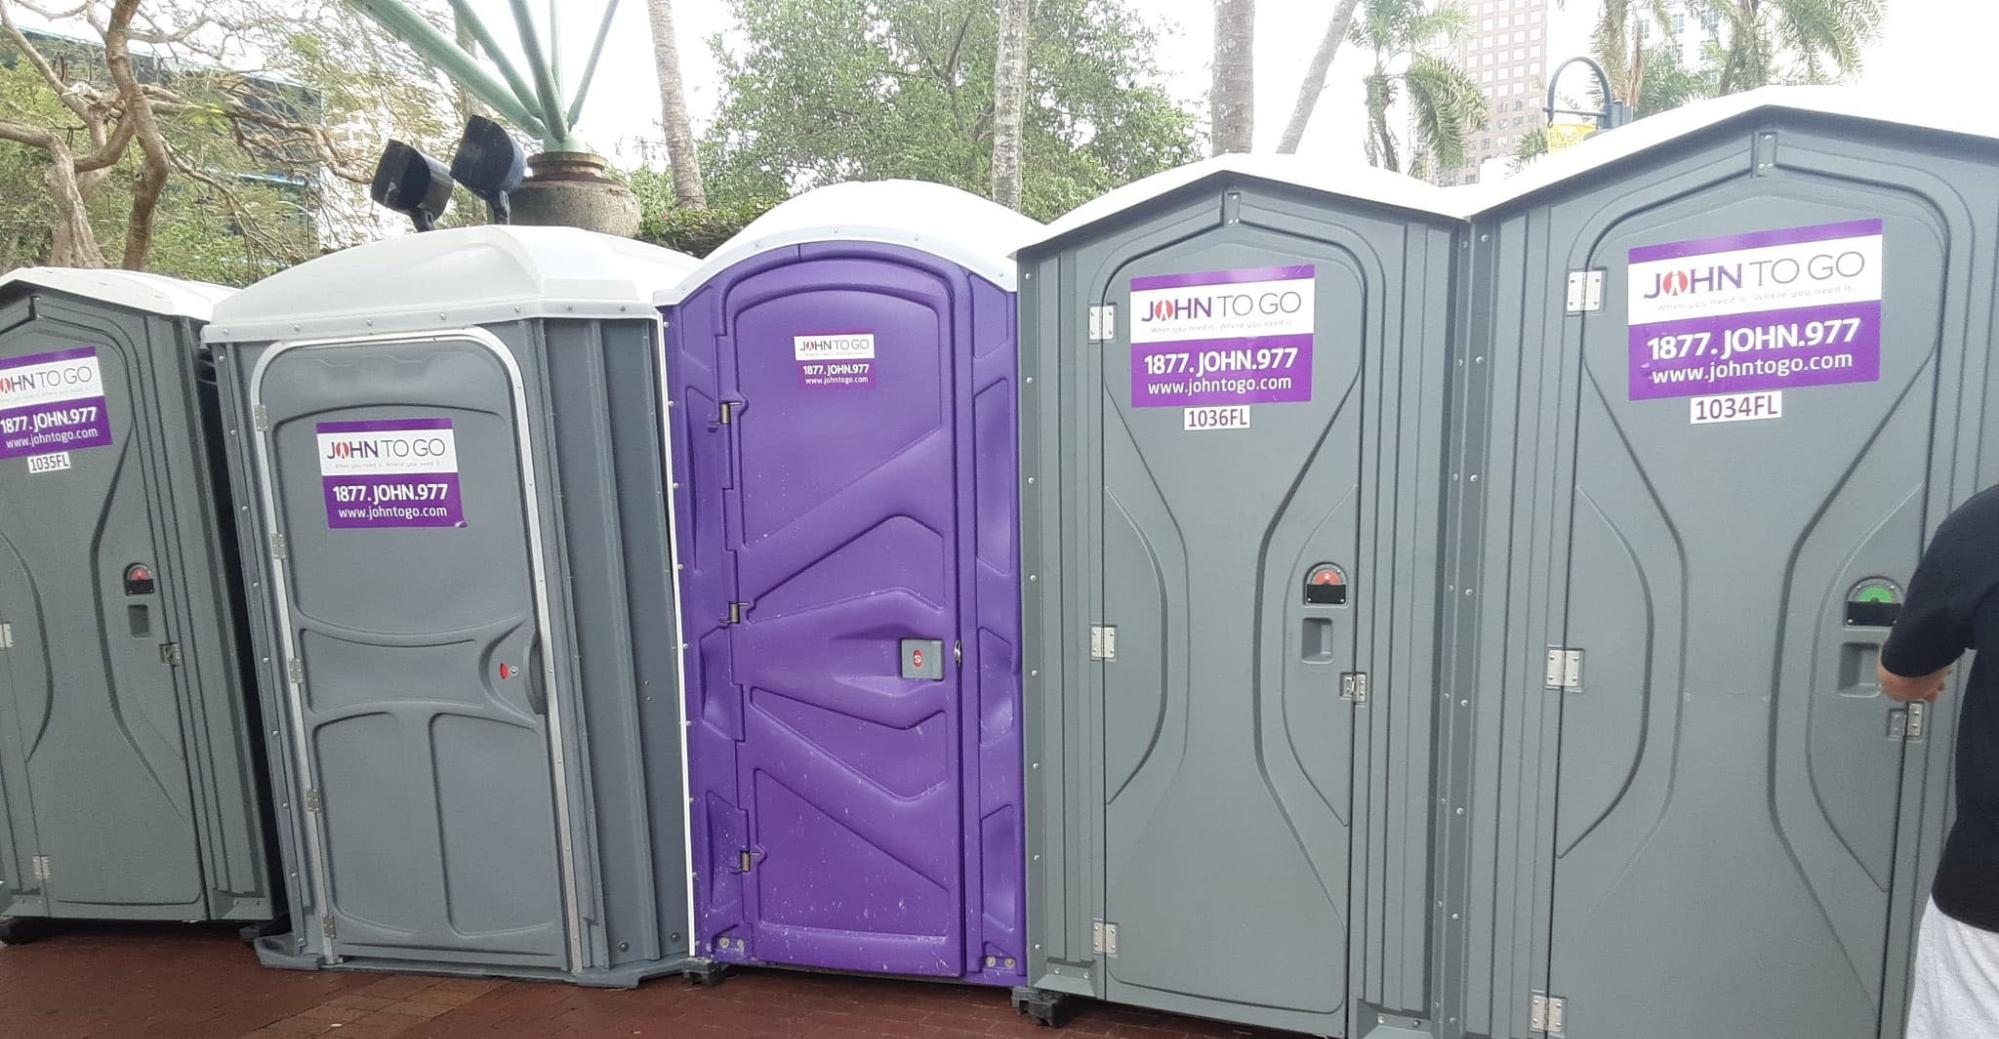 music festival toilets